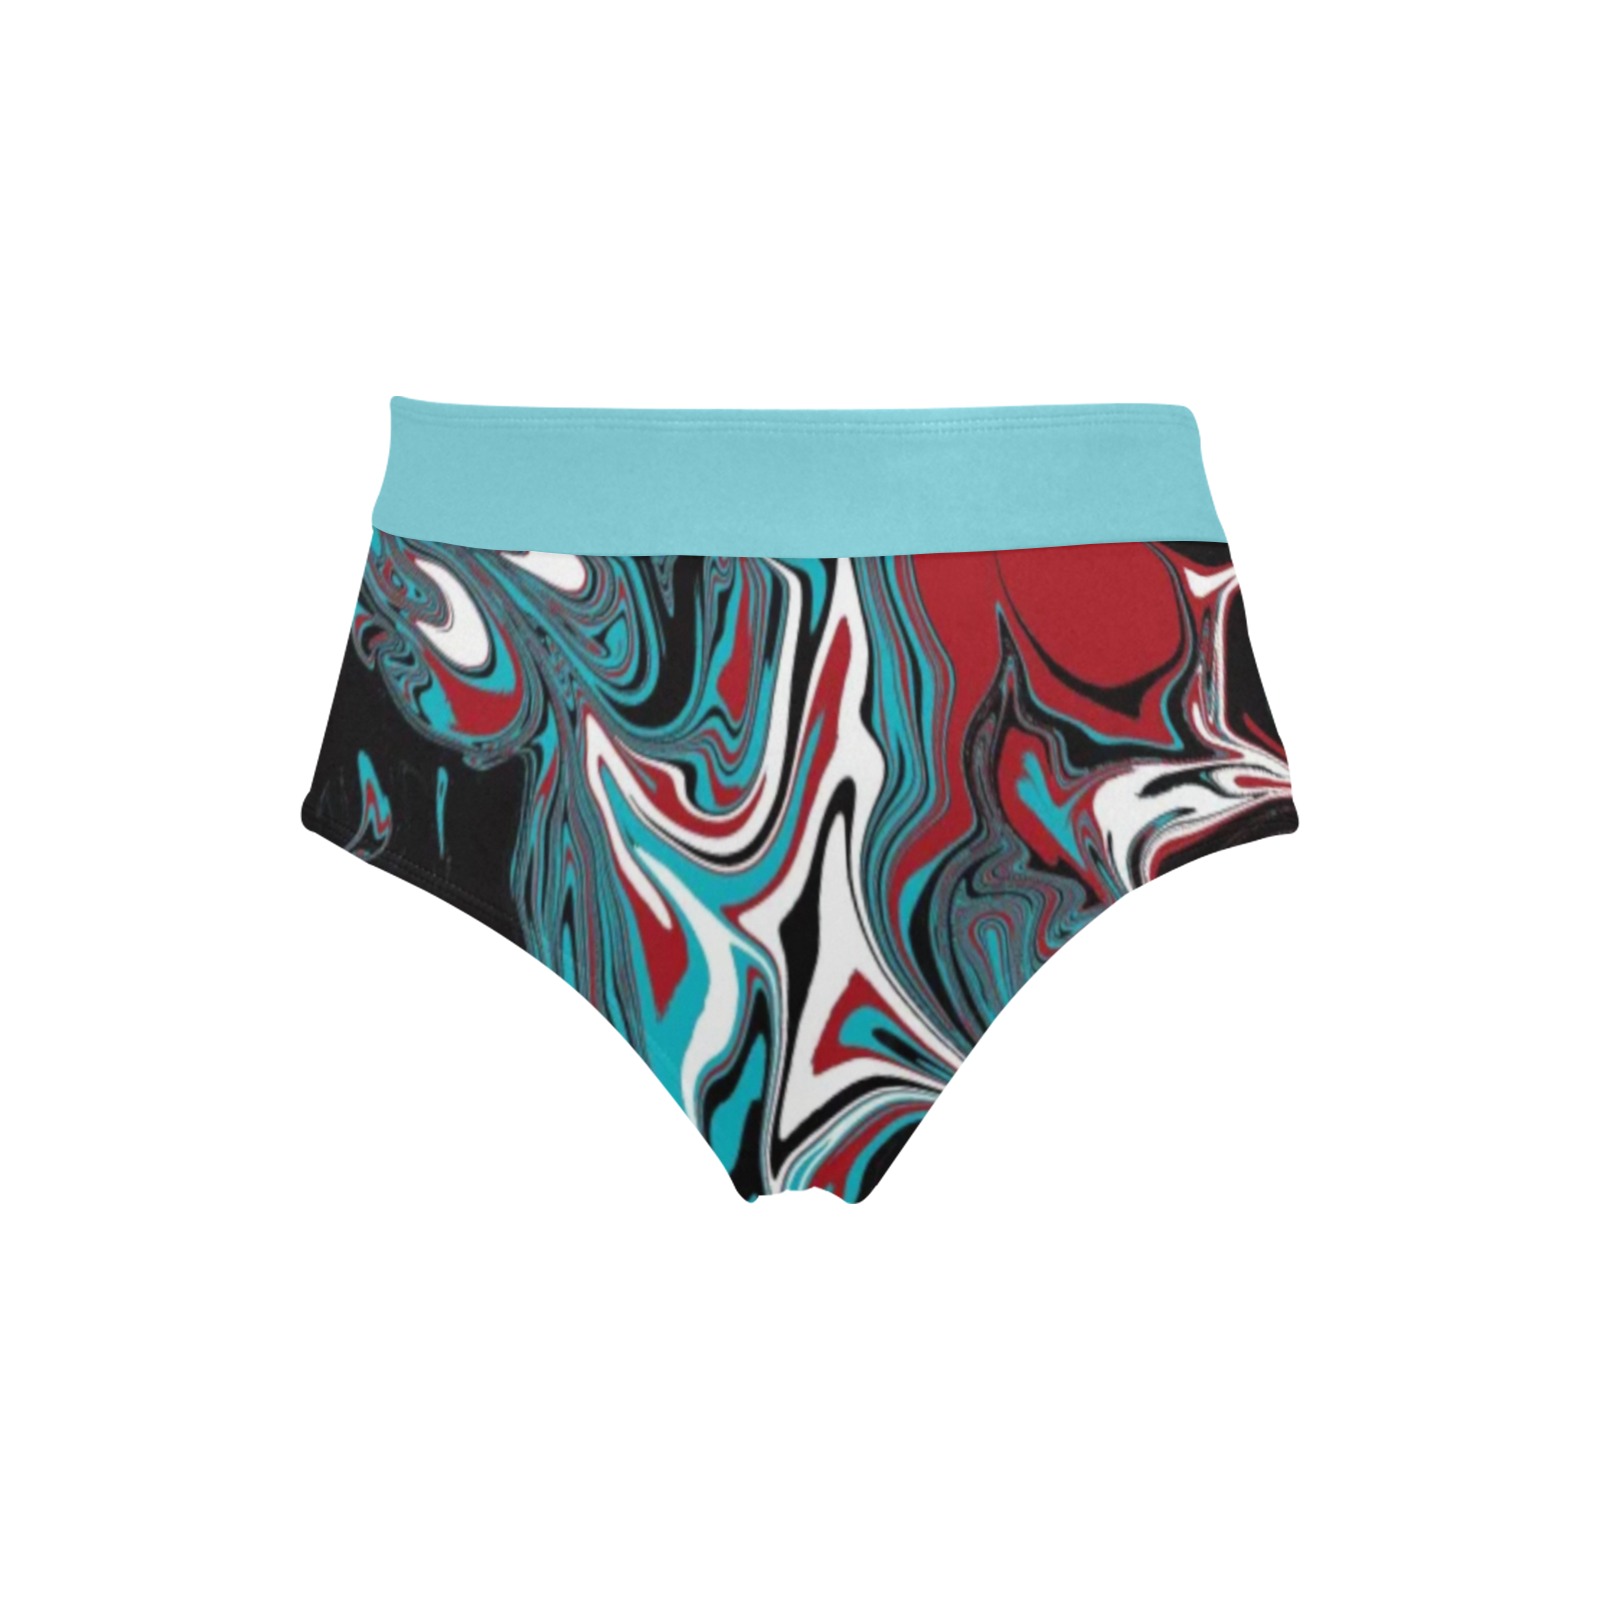 Dark Wave of Colors High-Waisted Bikini Bottom (Model S21)